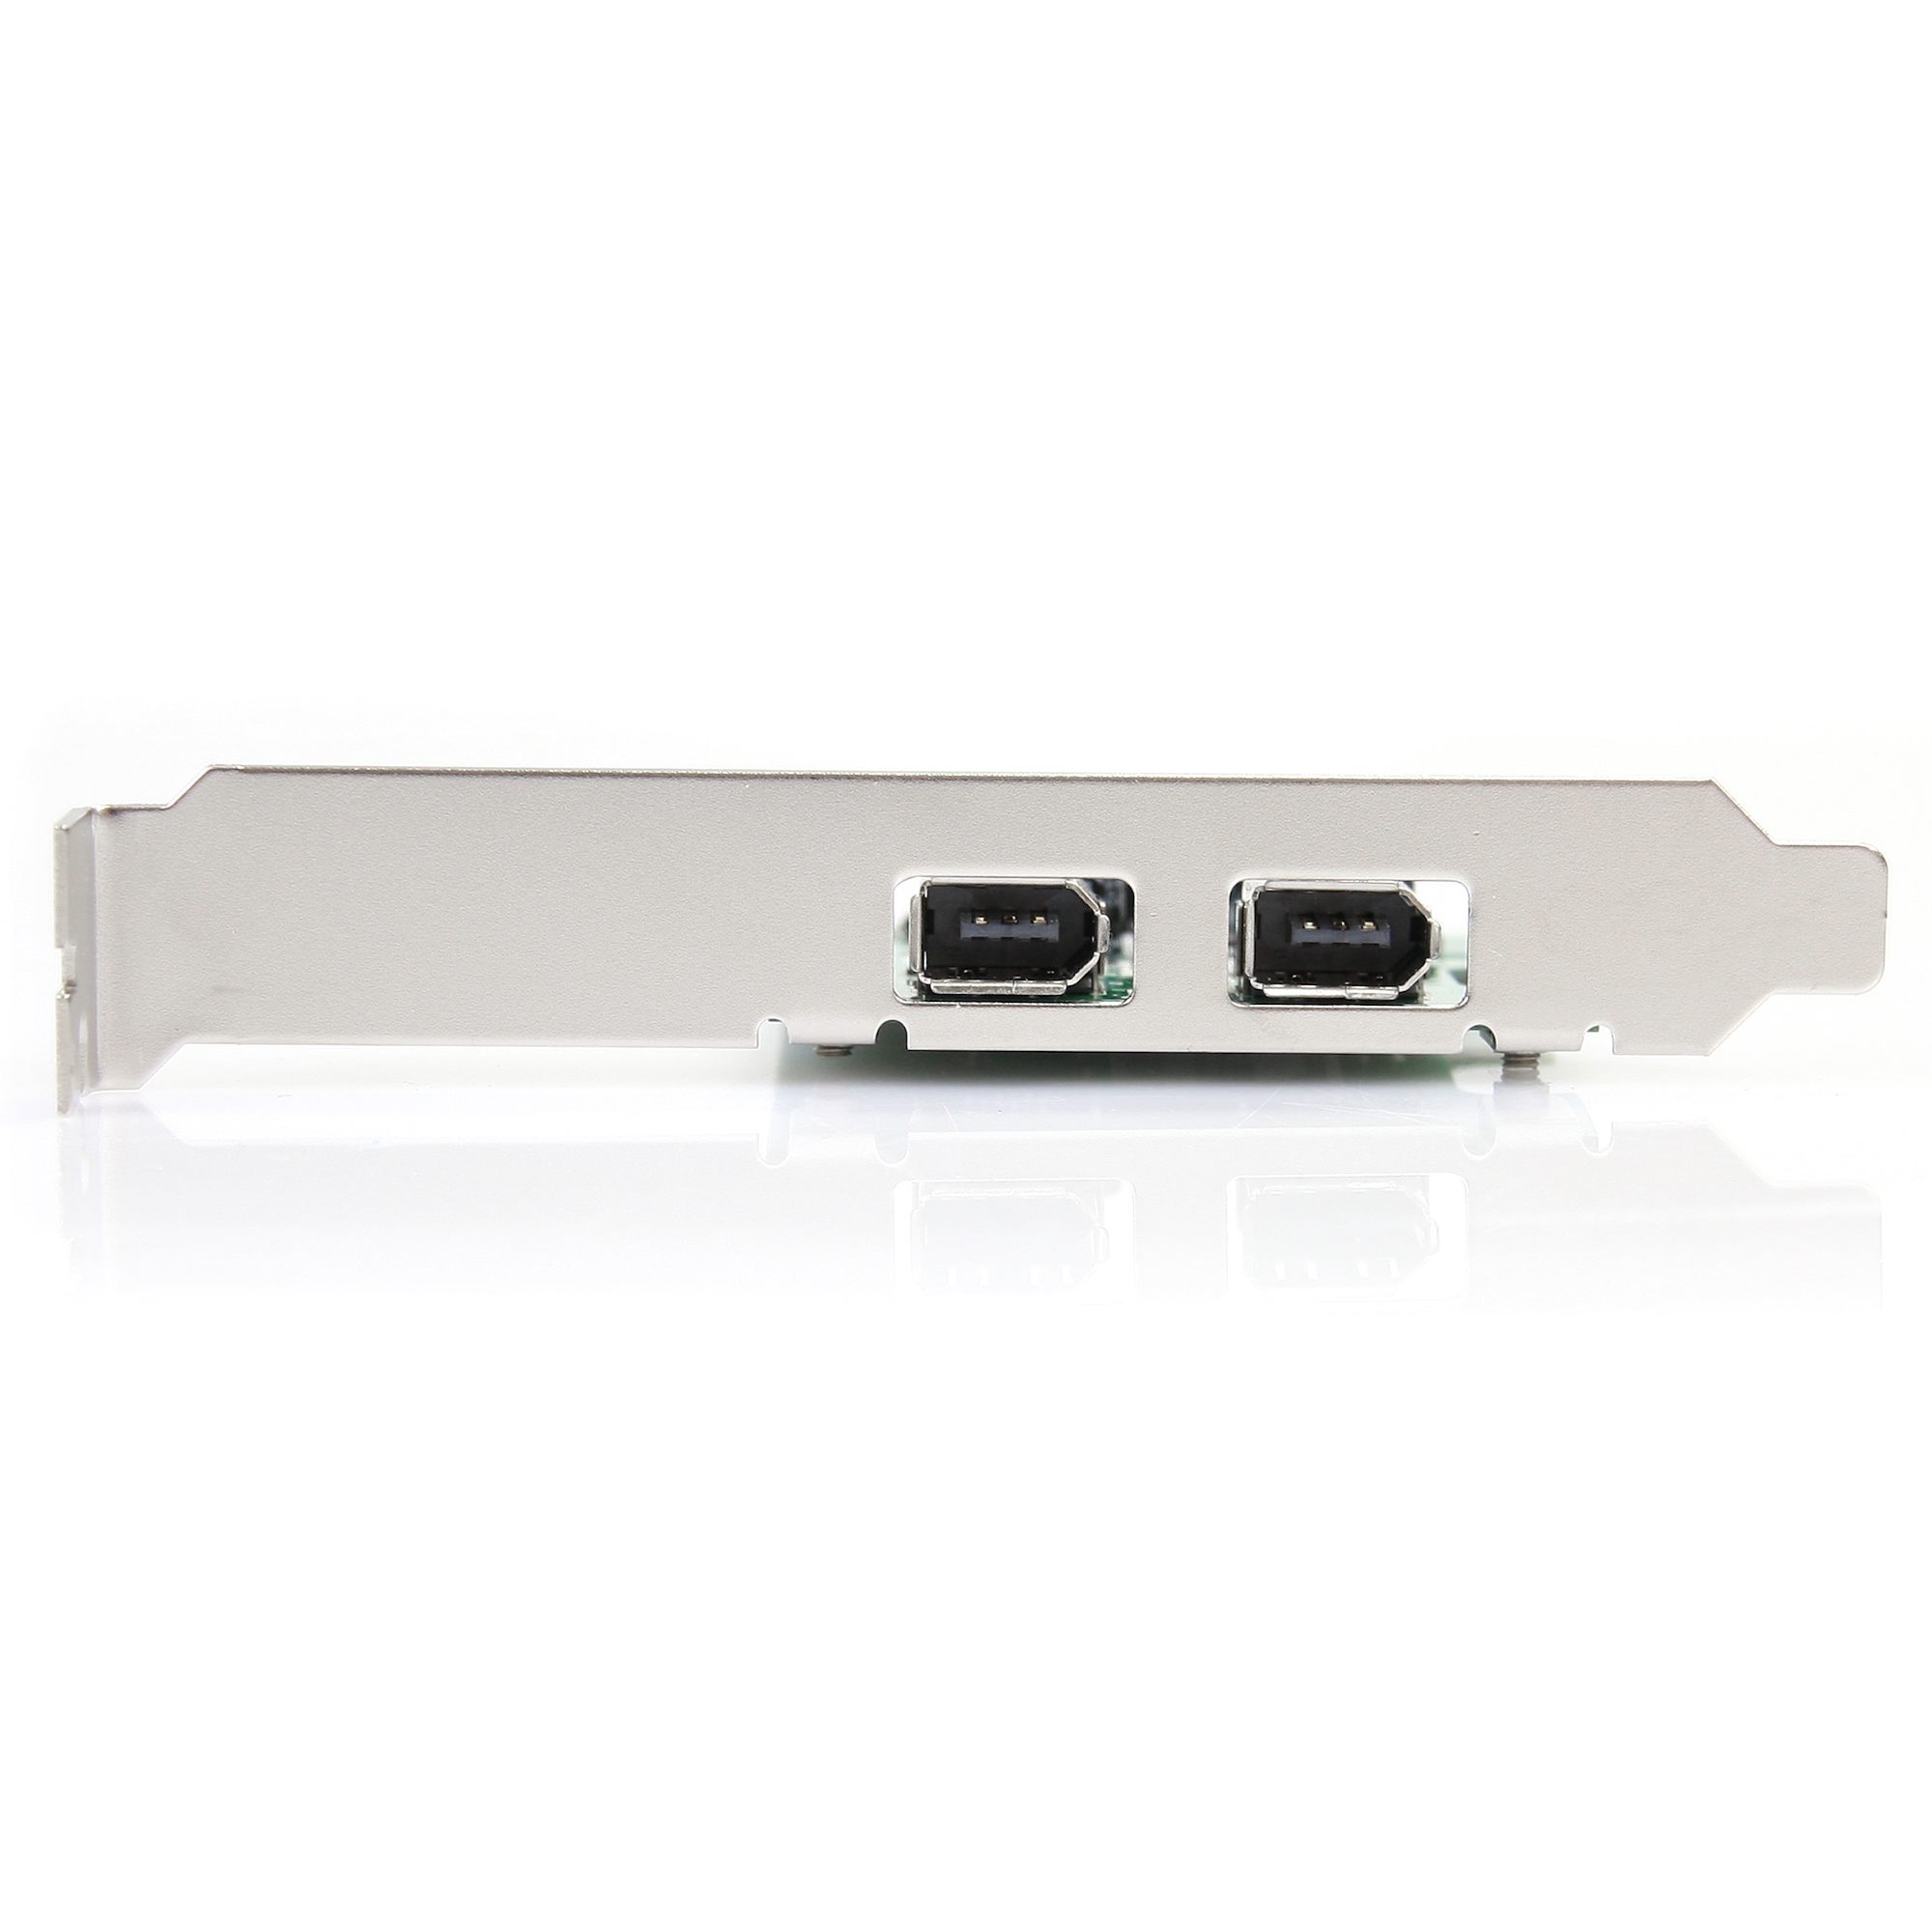 2 Port PCI Express 1394a FireWire Card - FireWire Cards | StarTech.com